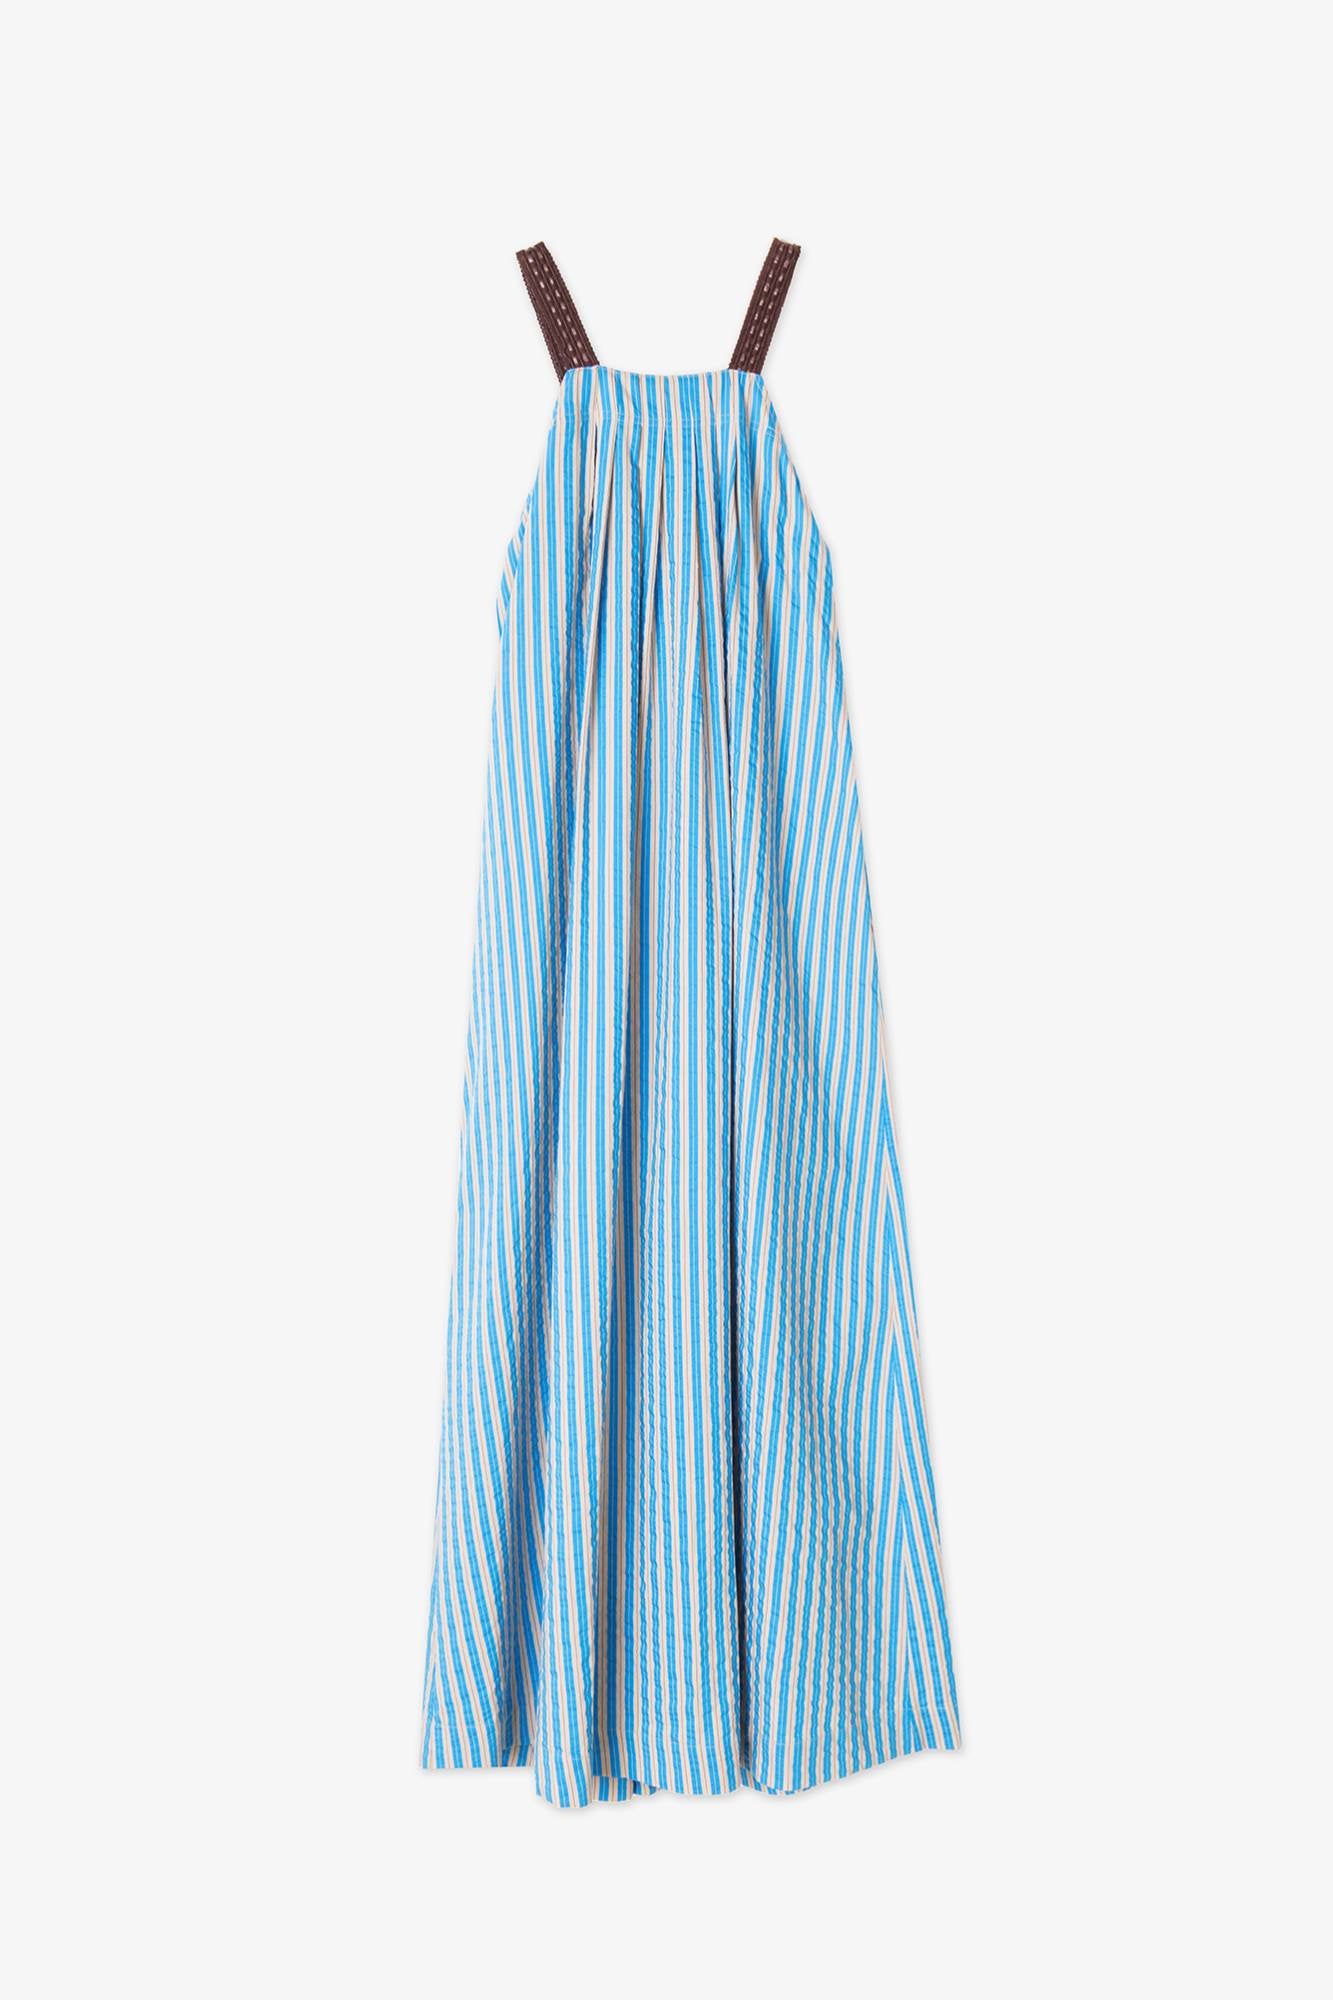 Long “Pencil Stripes” dress